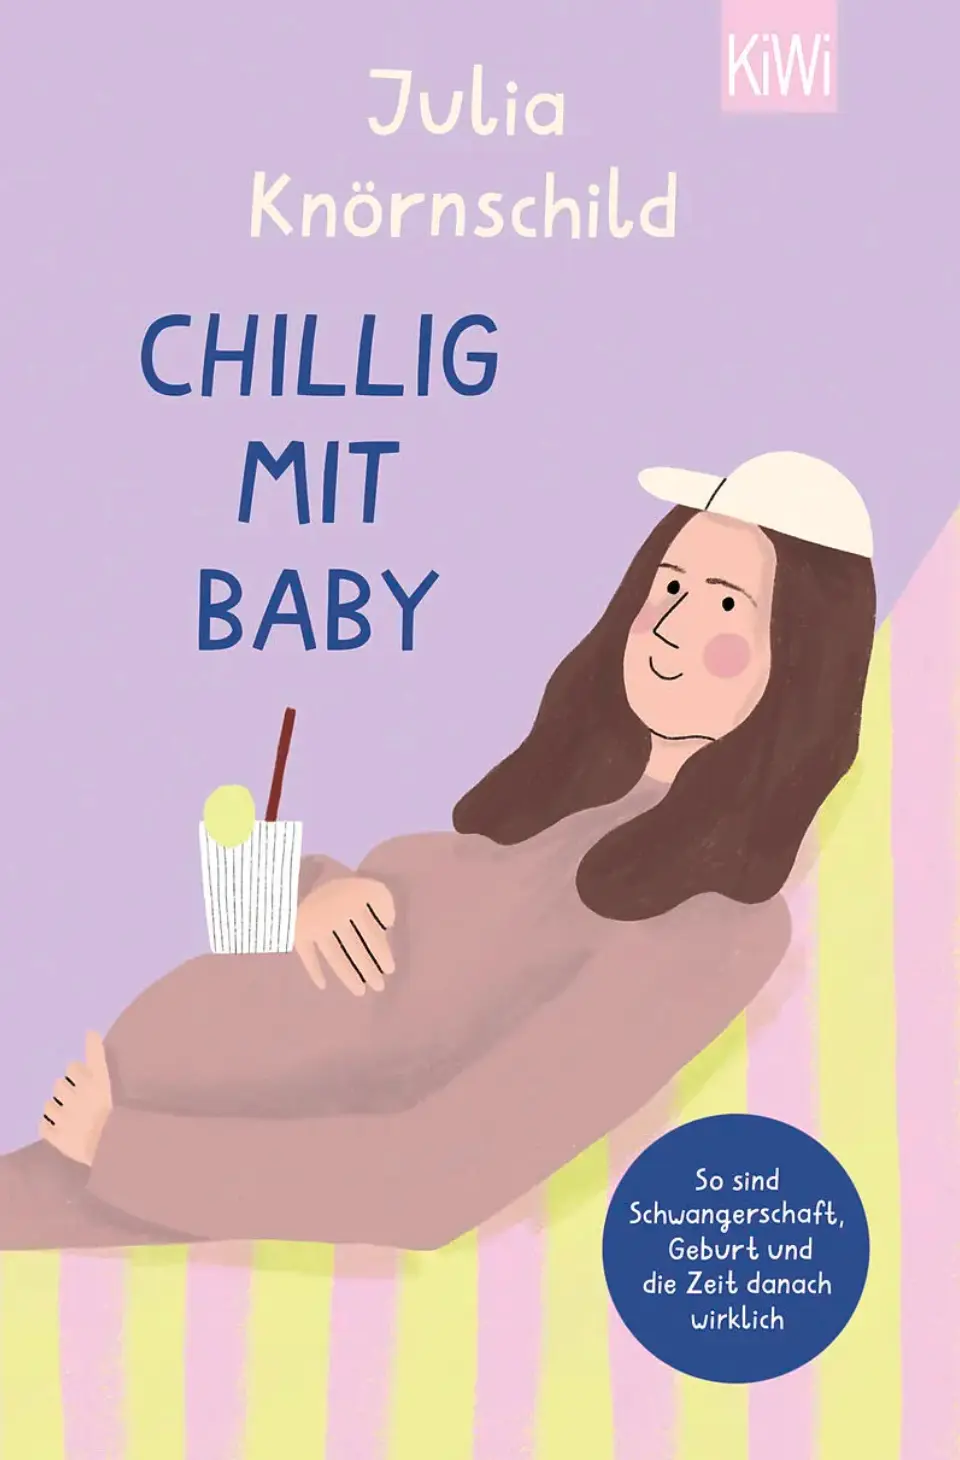 chillig-mit-baby-buchcover-kiwi-verlag-illustration-frau-schwanger-drink